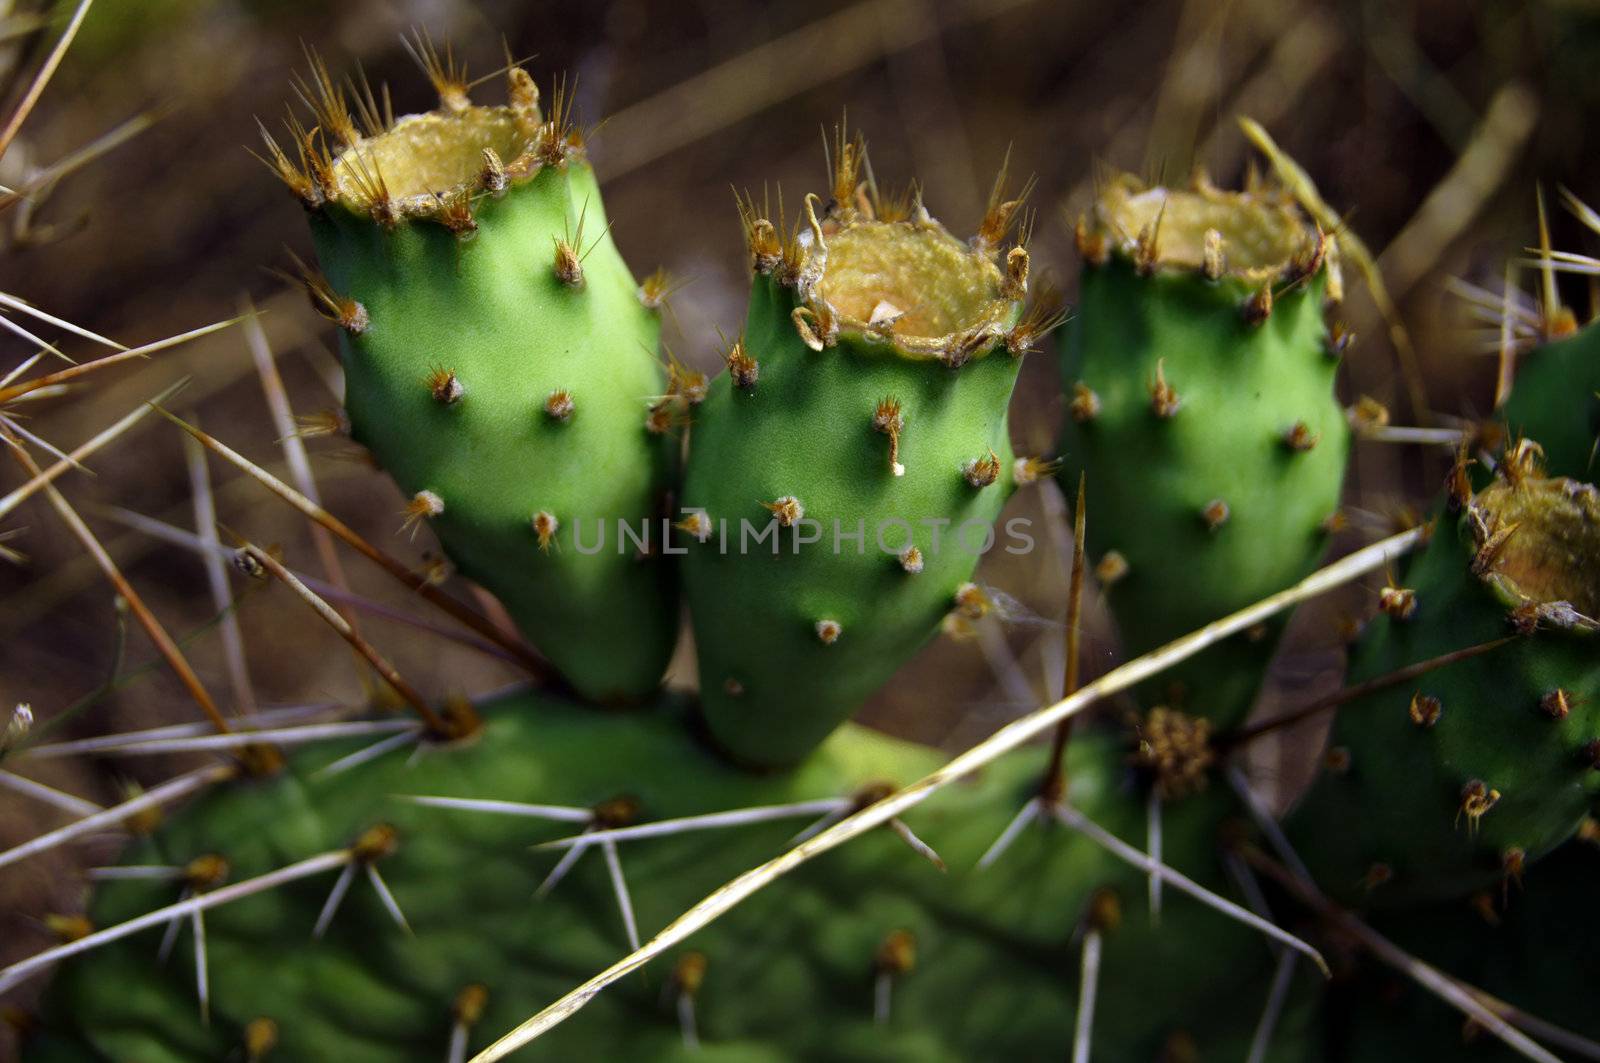 Prickly pair on Opuntia cactus